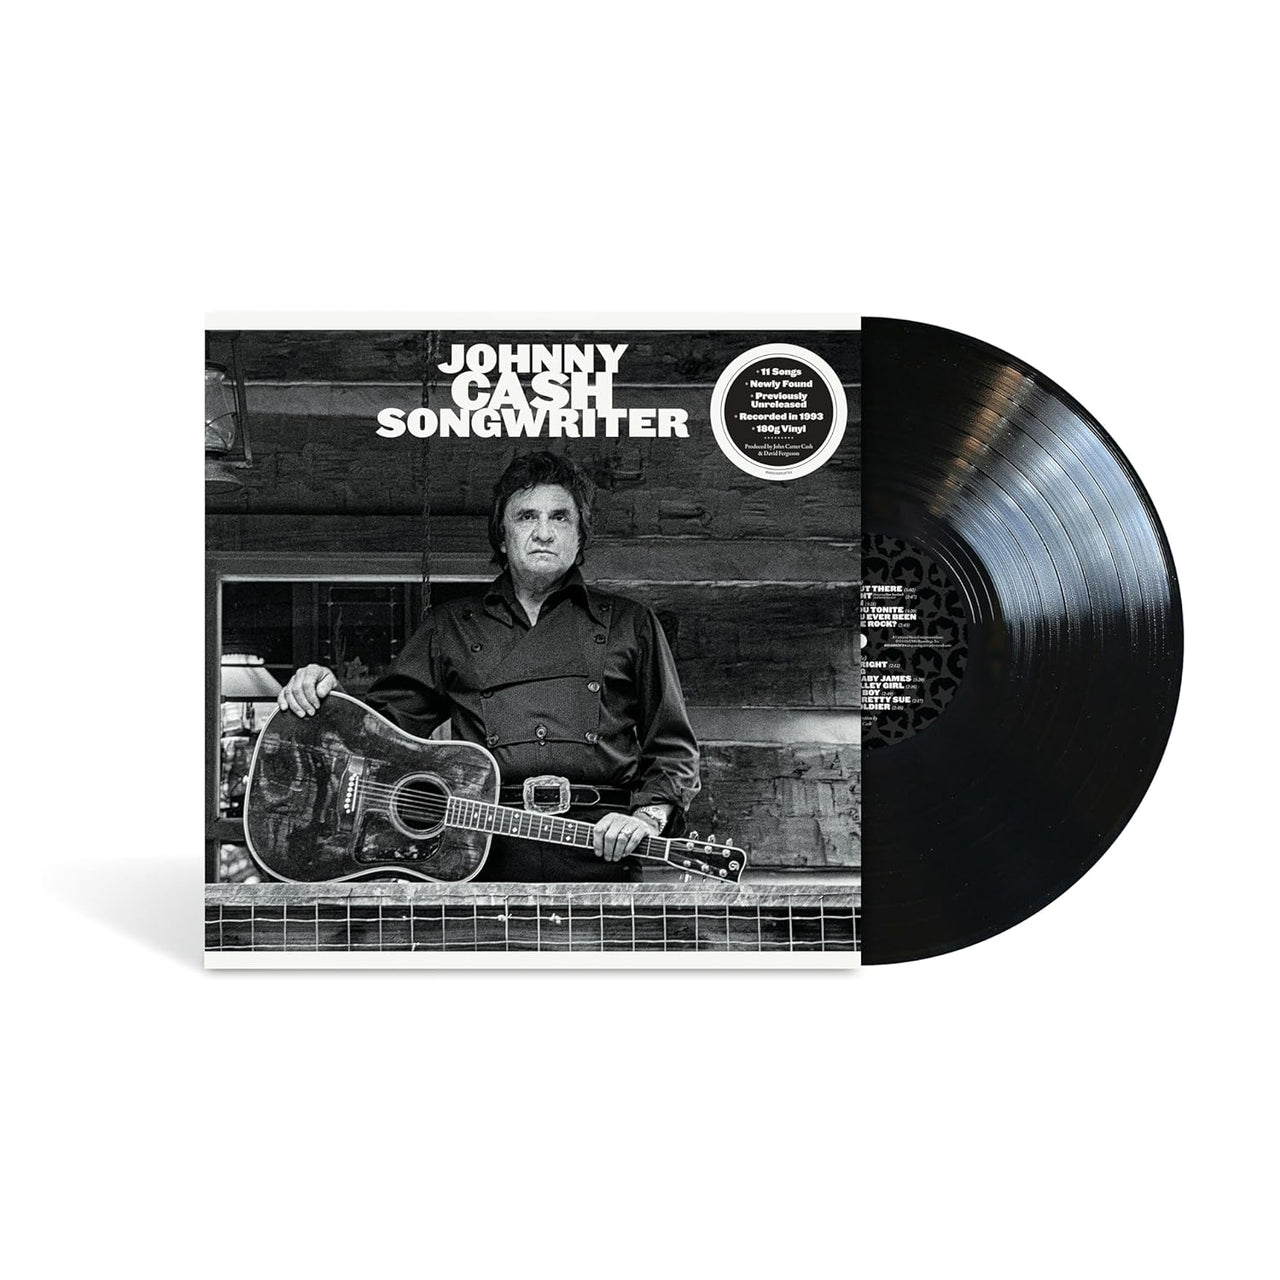 Johnny Cash: Songwriter Vinyl LP